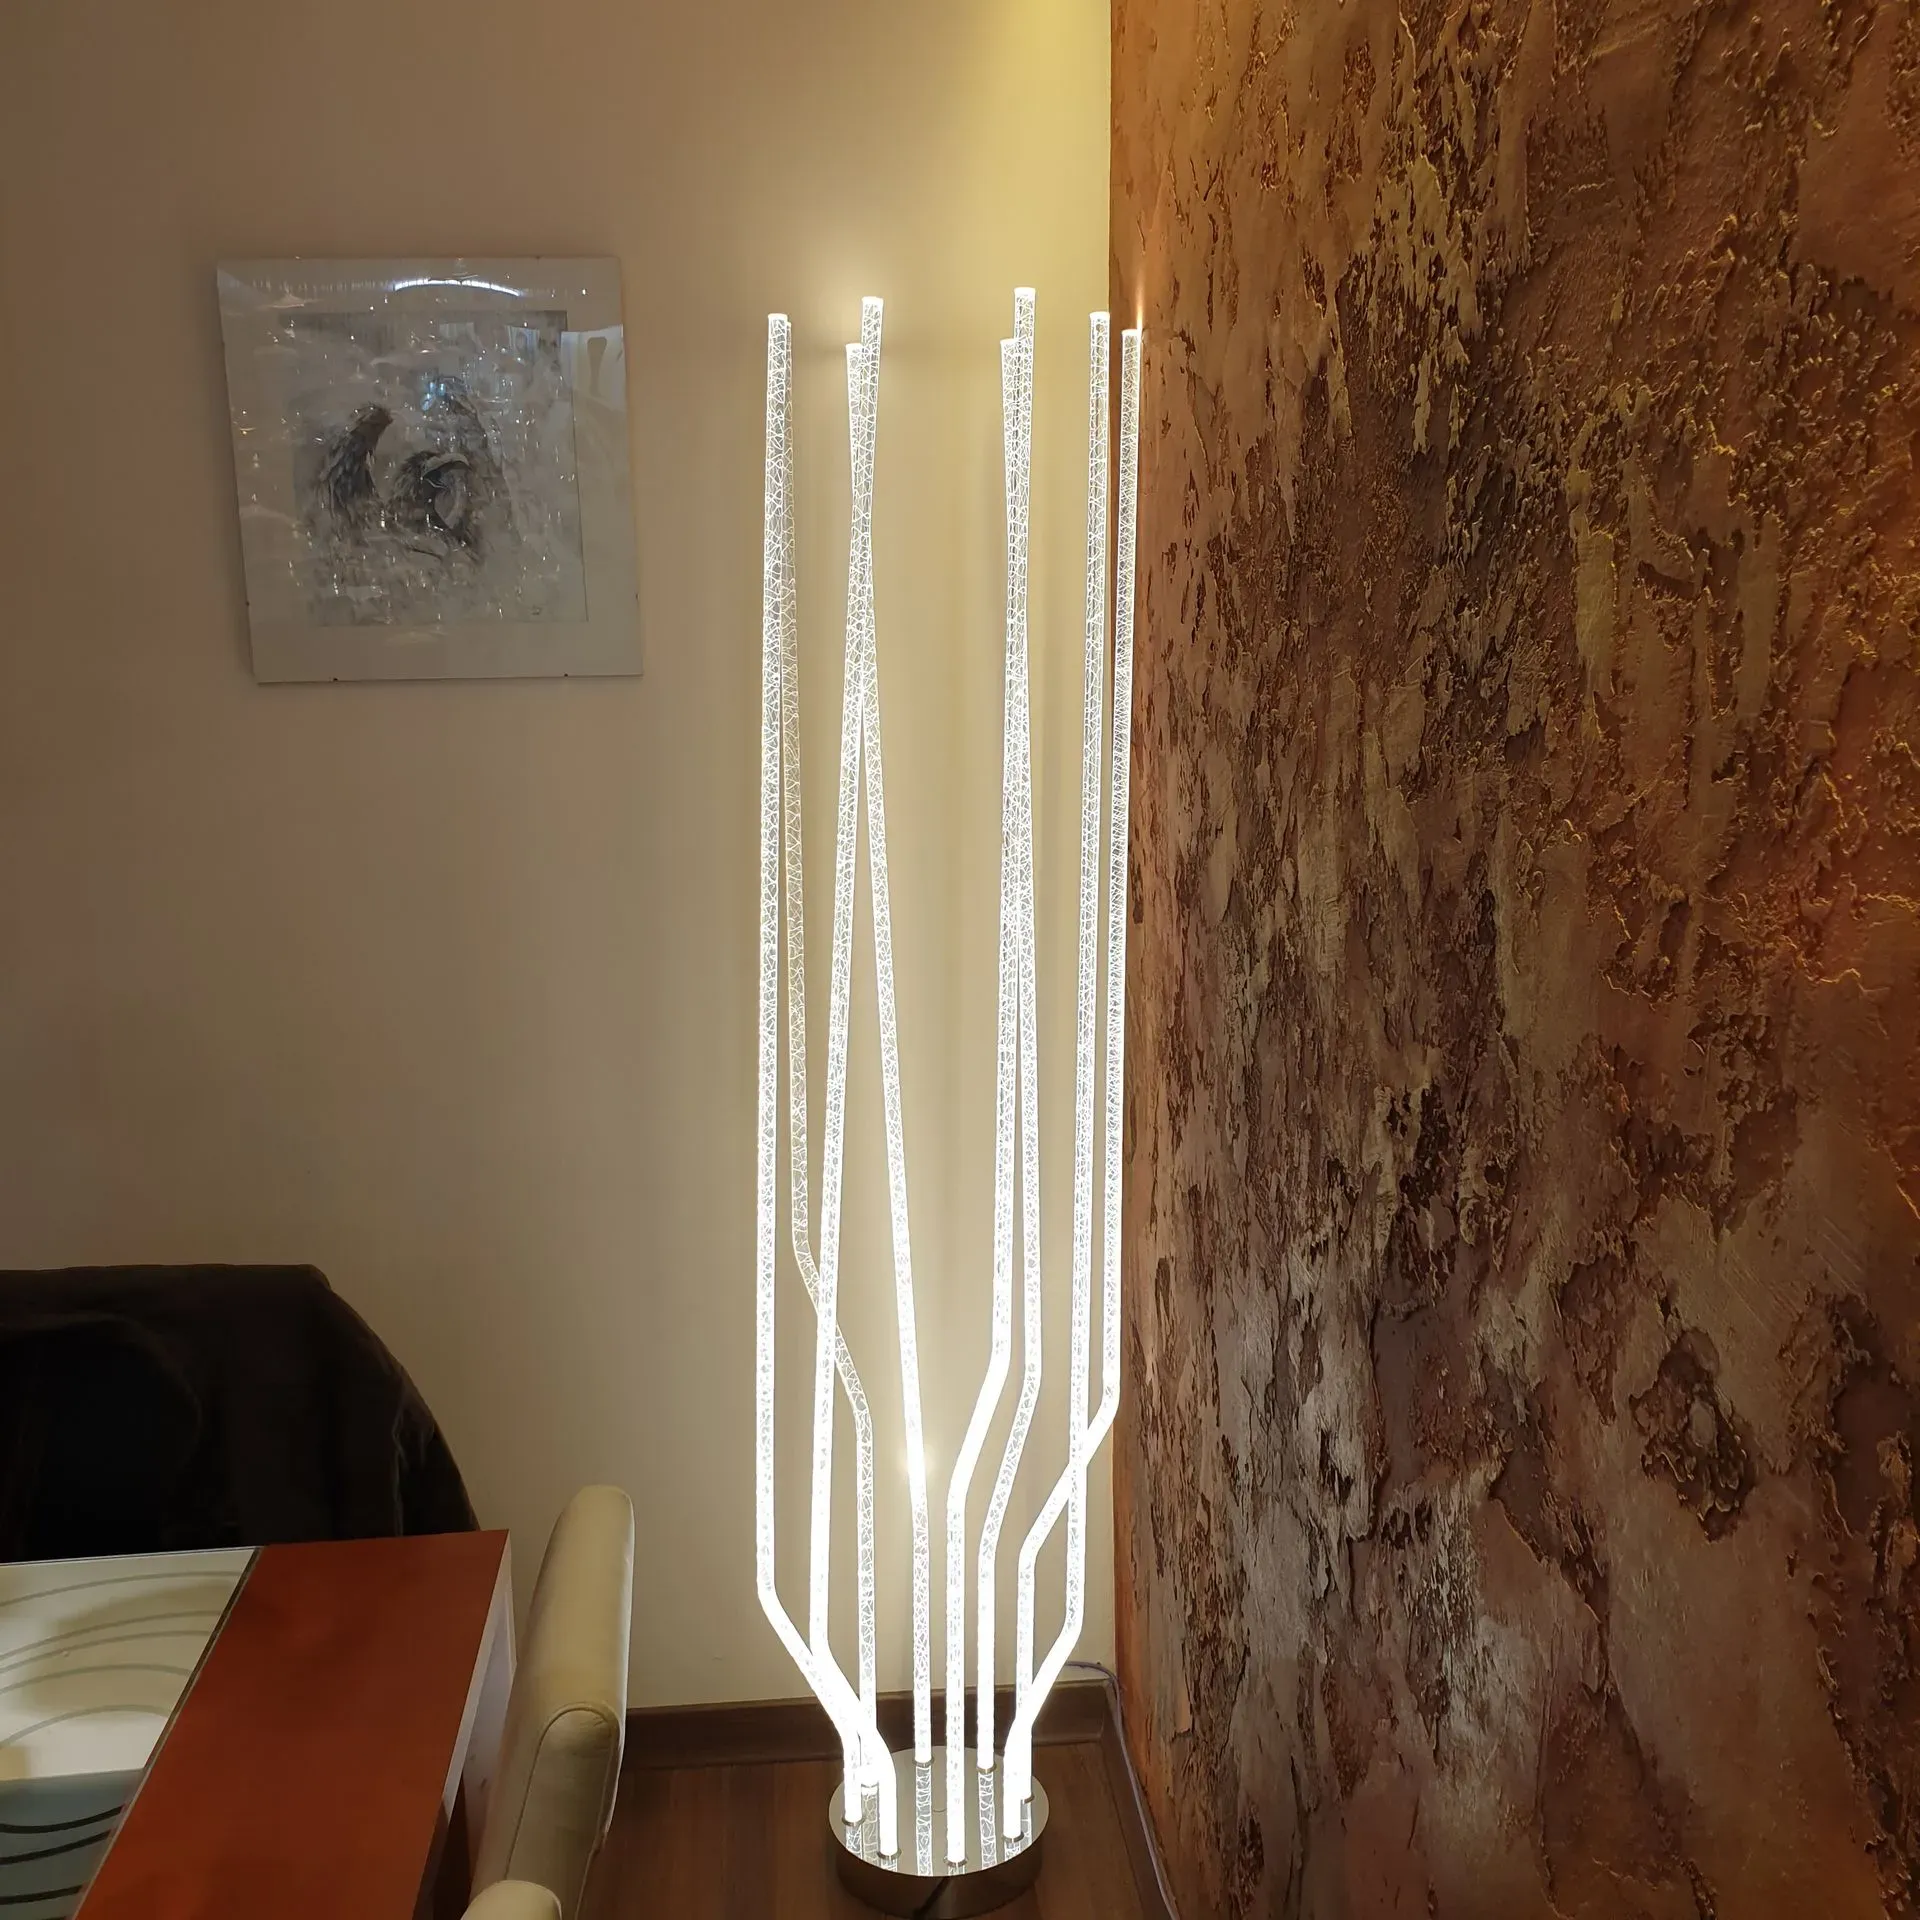 Showroom TREA floor lamp made of fibre optic light rods 2m tall lamp in interior